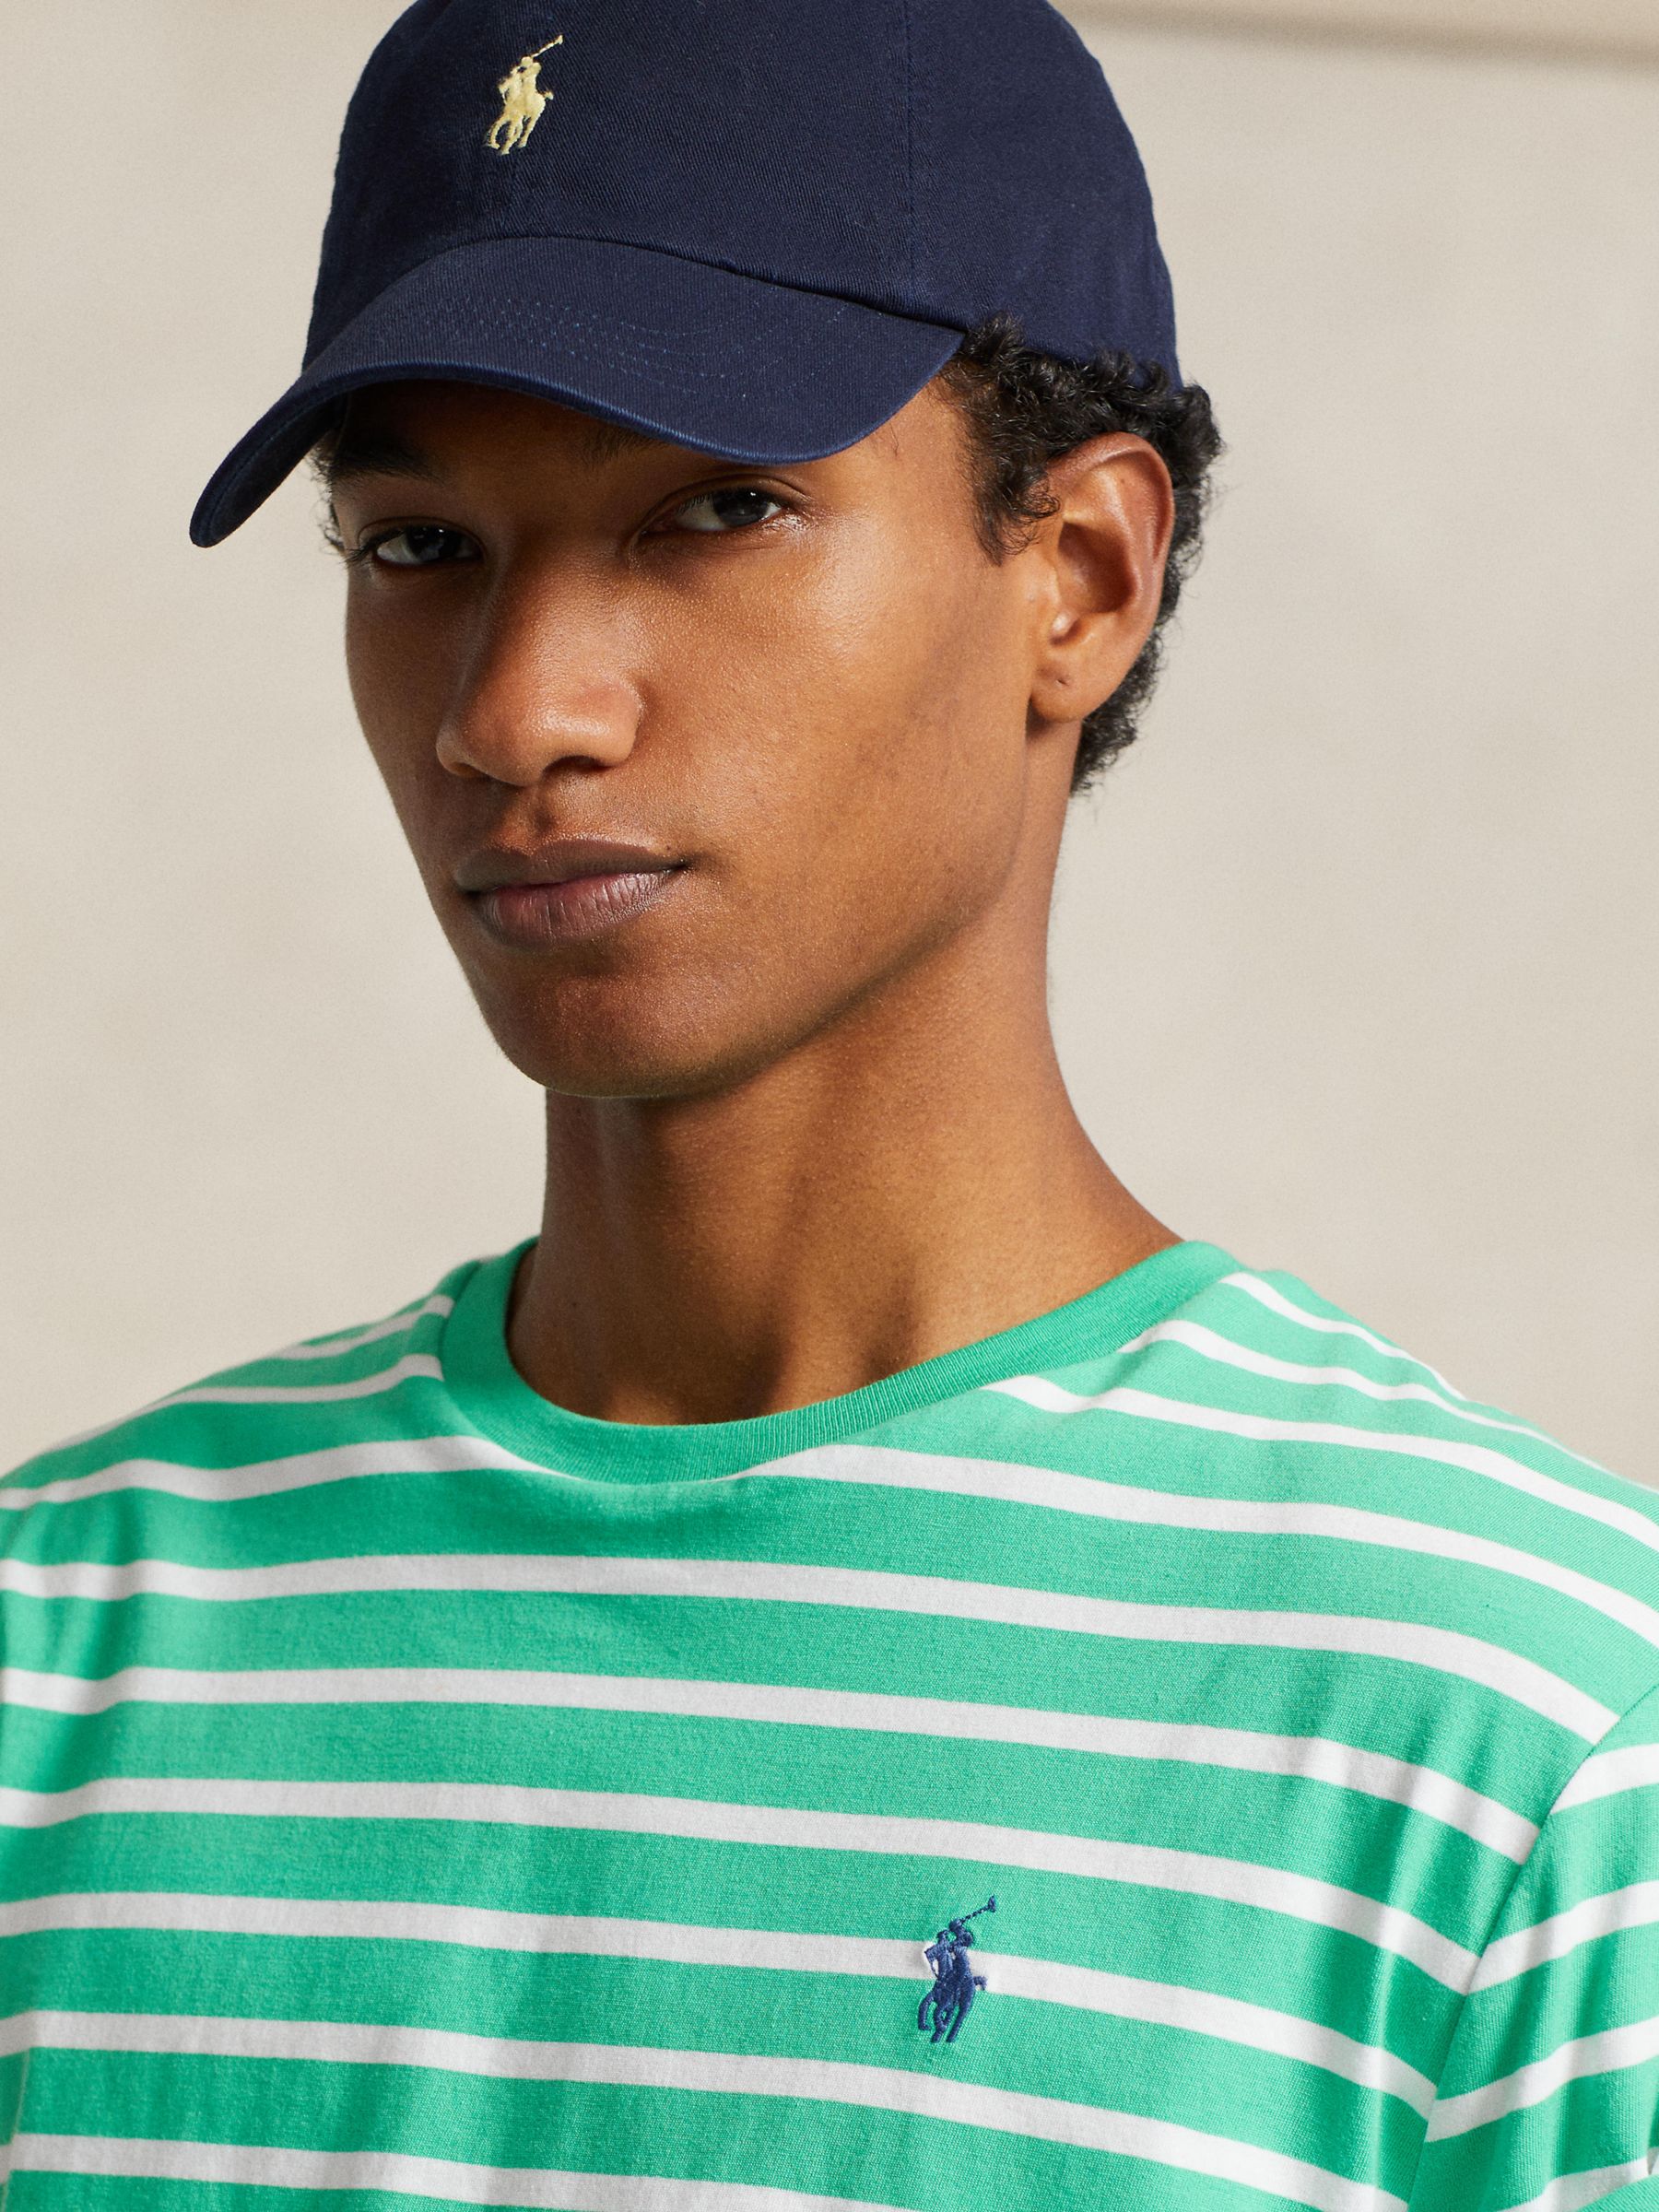 Ralph Lauren Classic Fit Striped Jersey T-Shirt, Green/White, M